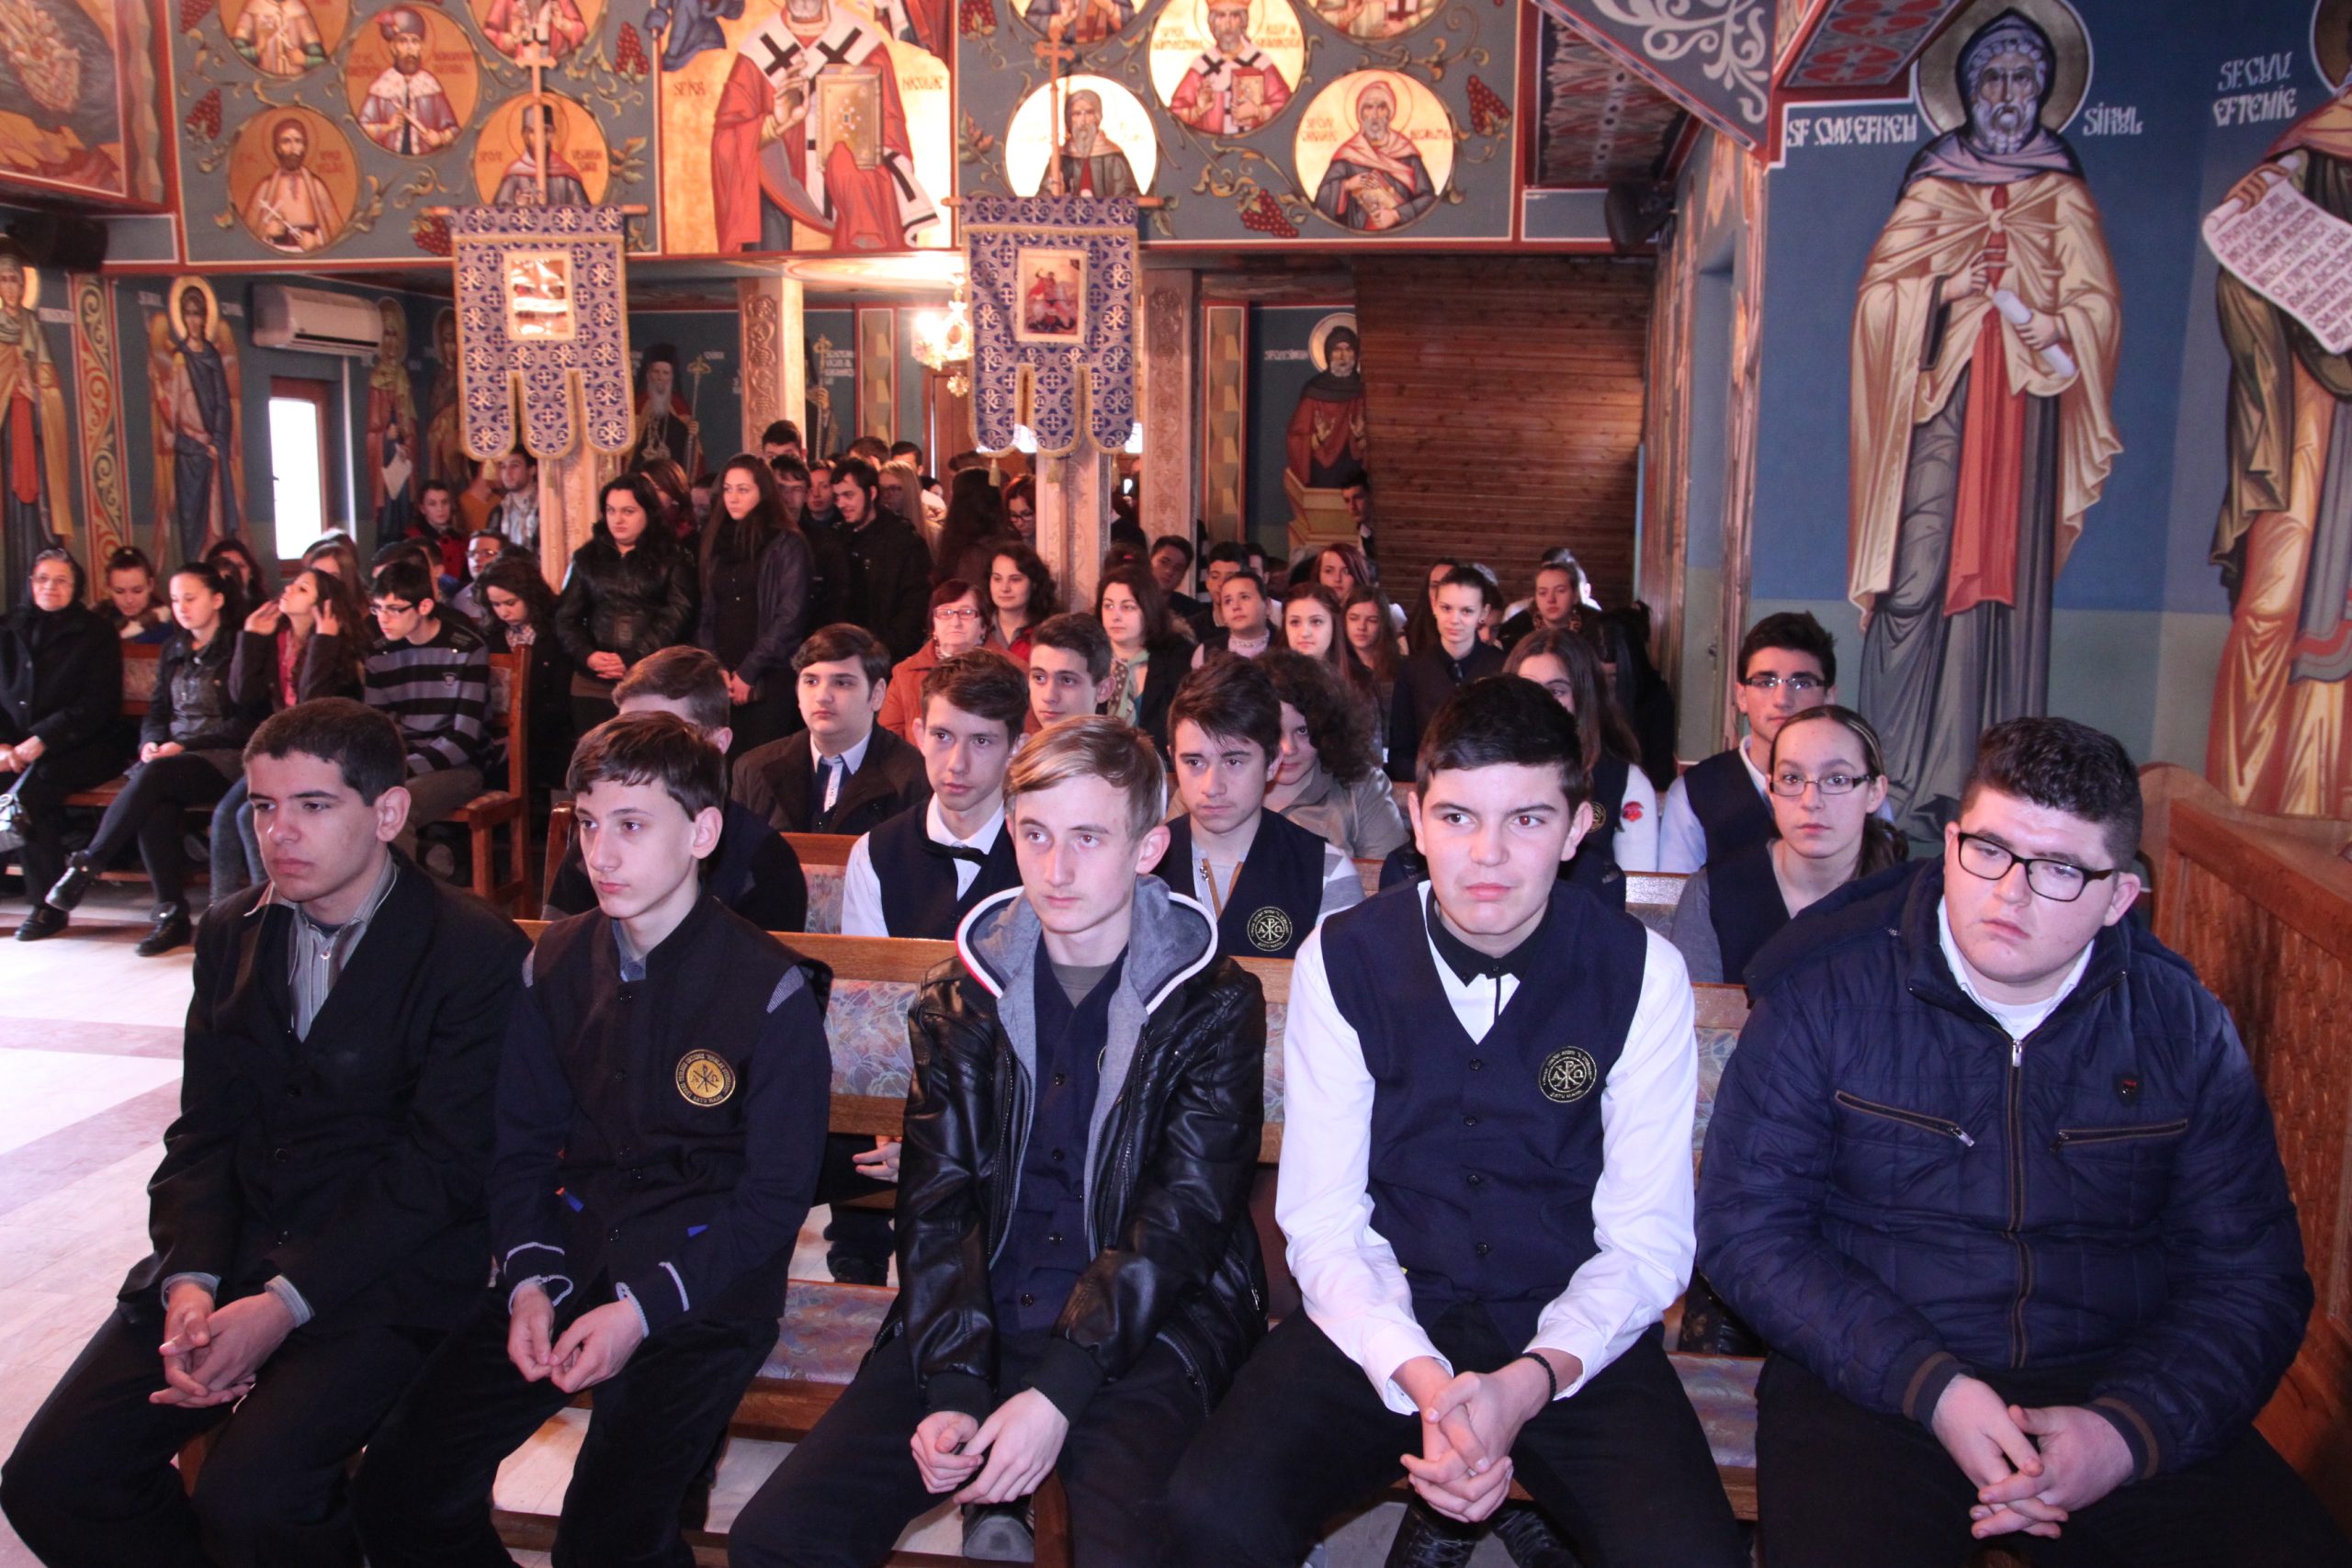 A început seria întâlnirilor duhovniceşti la Liceul Ortodox "Nicolae Steinhardt"